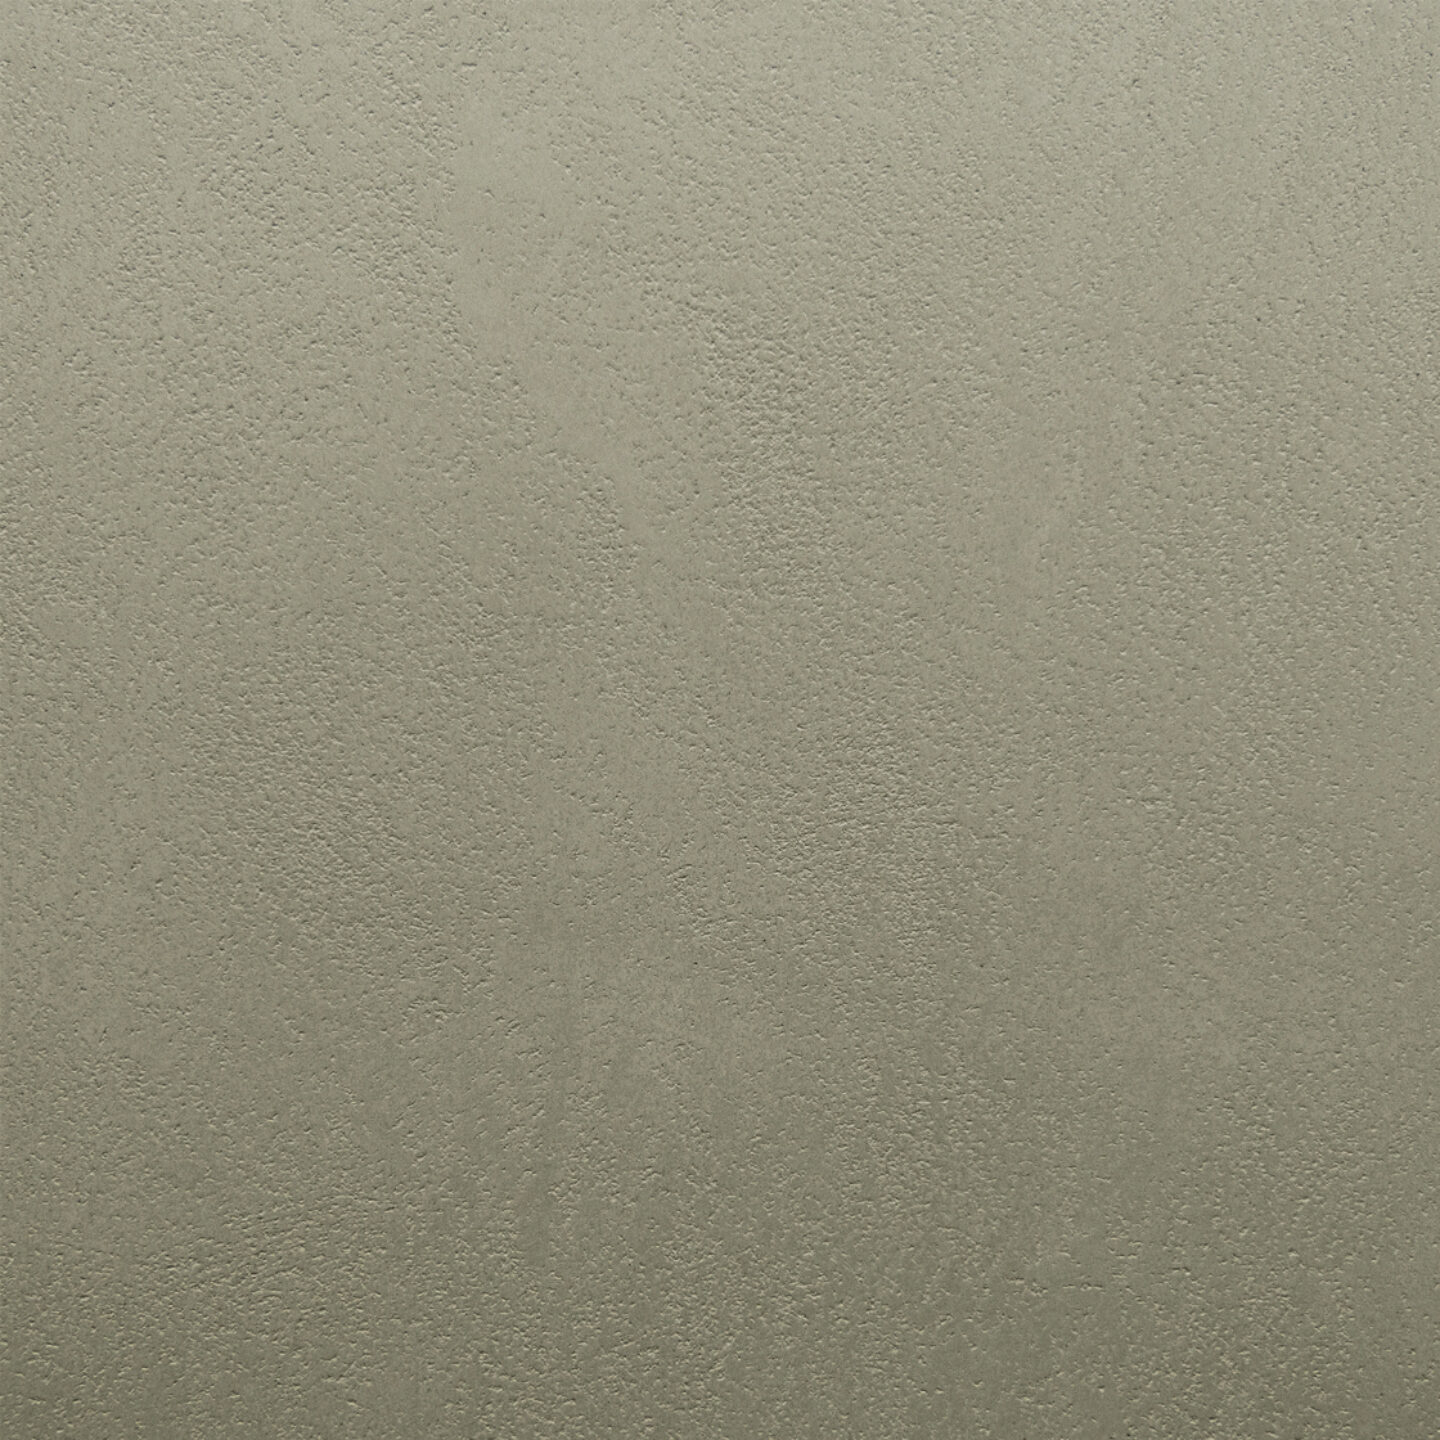 Close up of Armourcoat leatherstone exterior polished plaster finish - 65